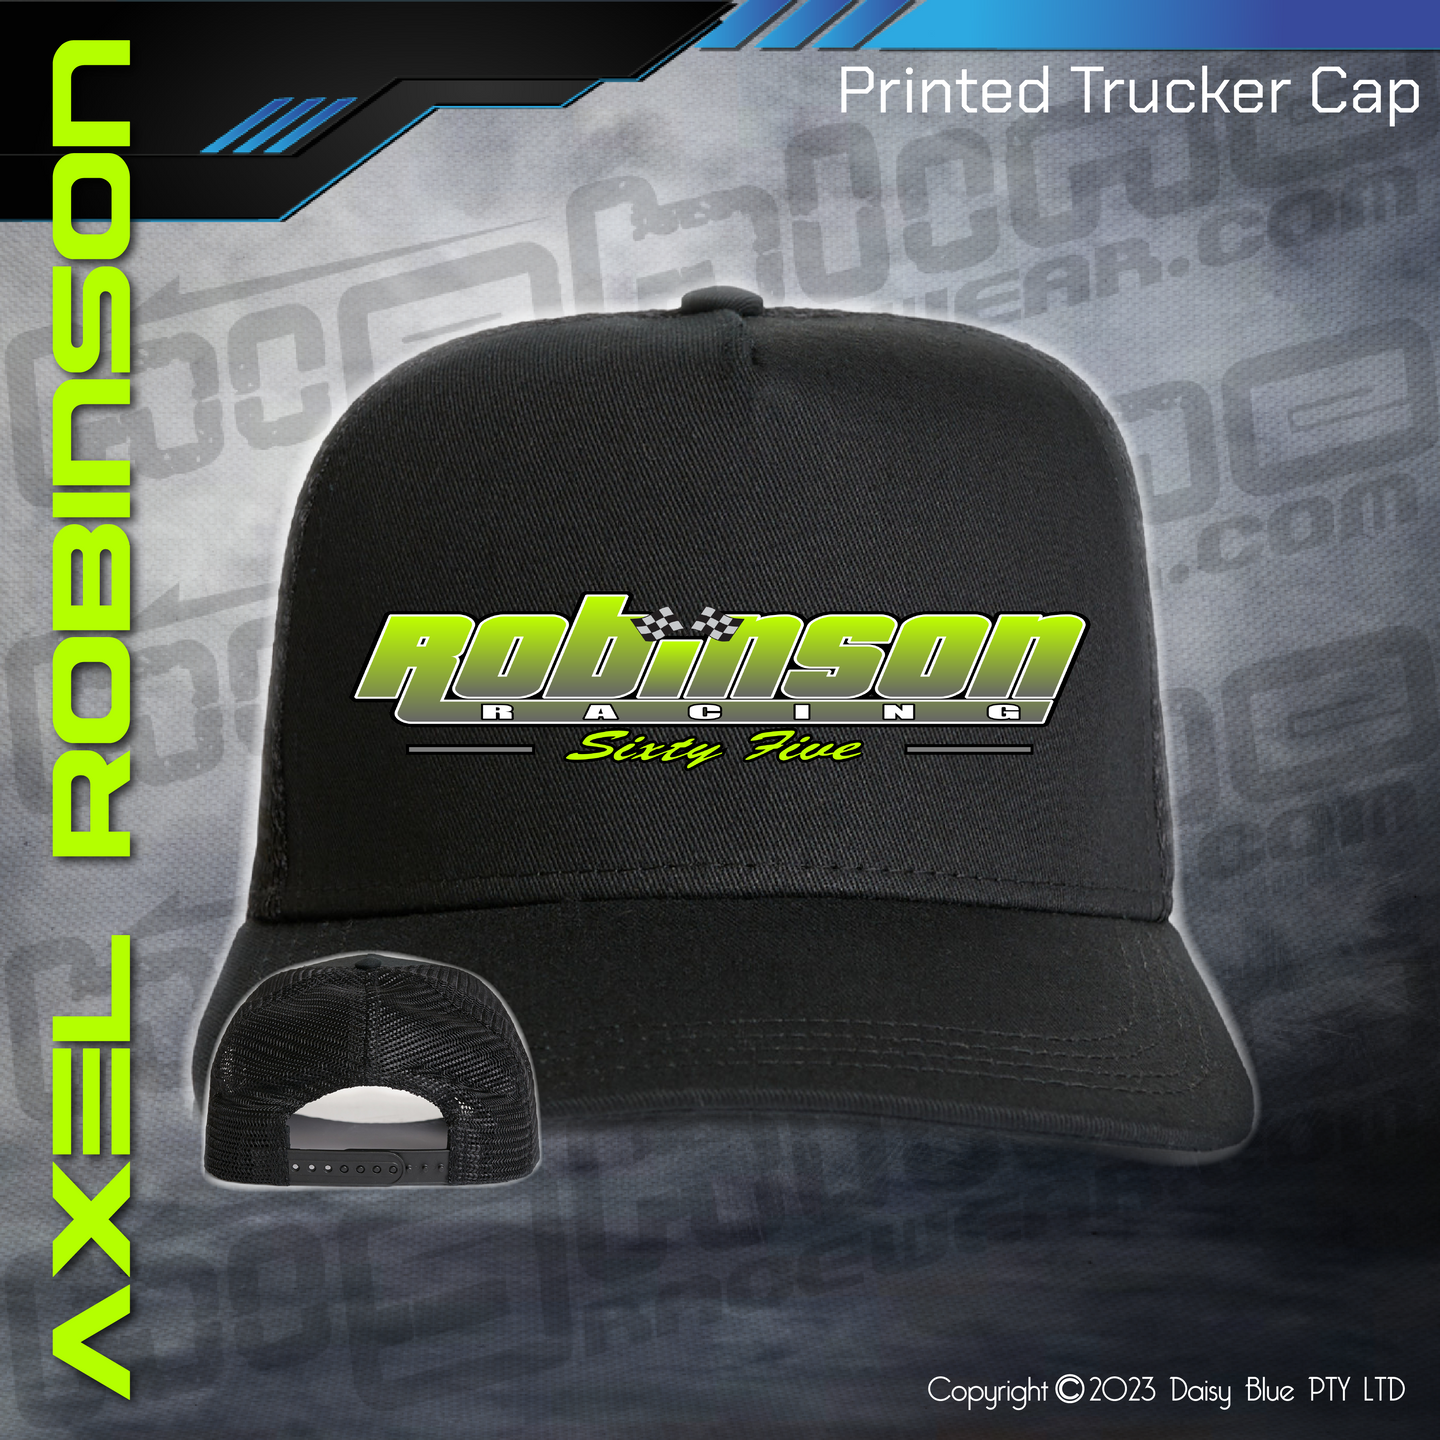 Printed Trucker Cap - Axel Robinson